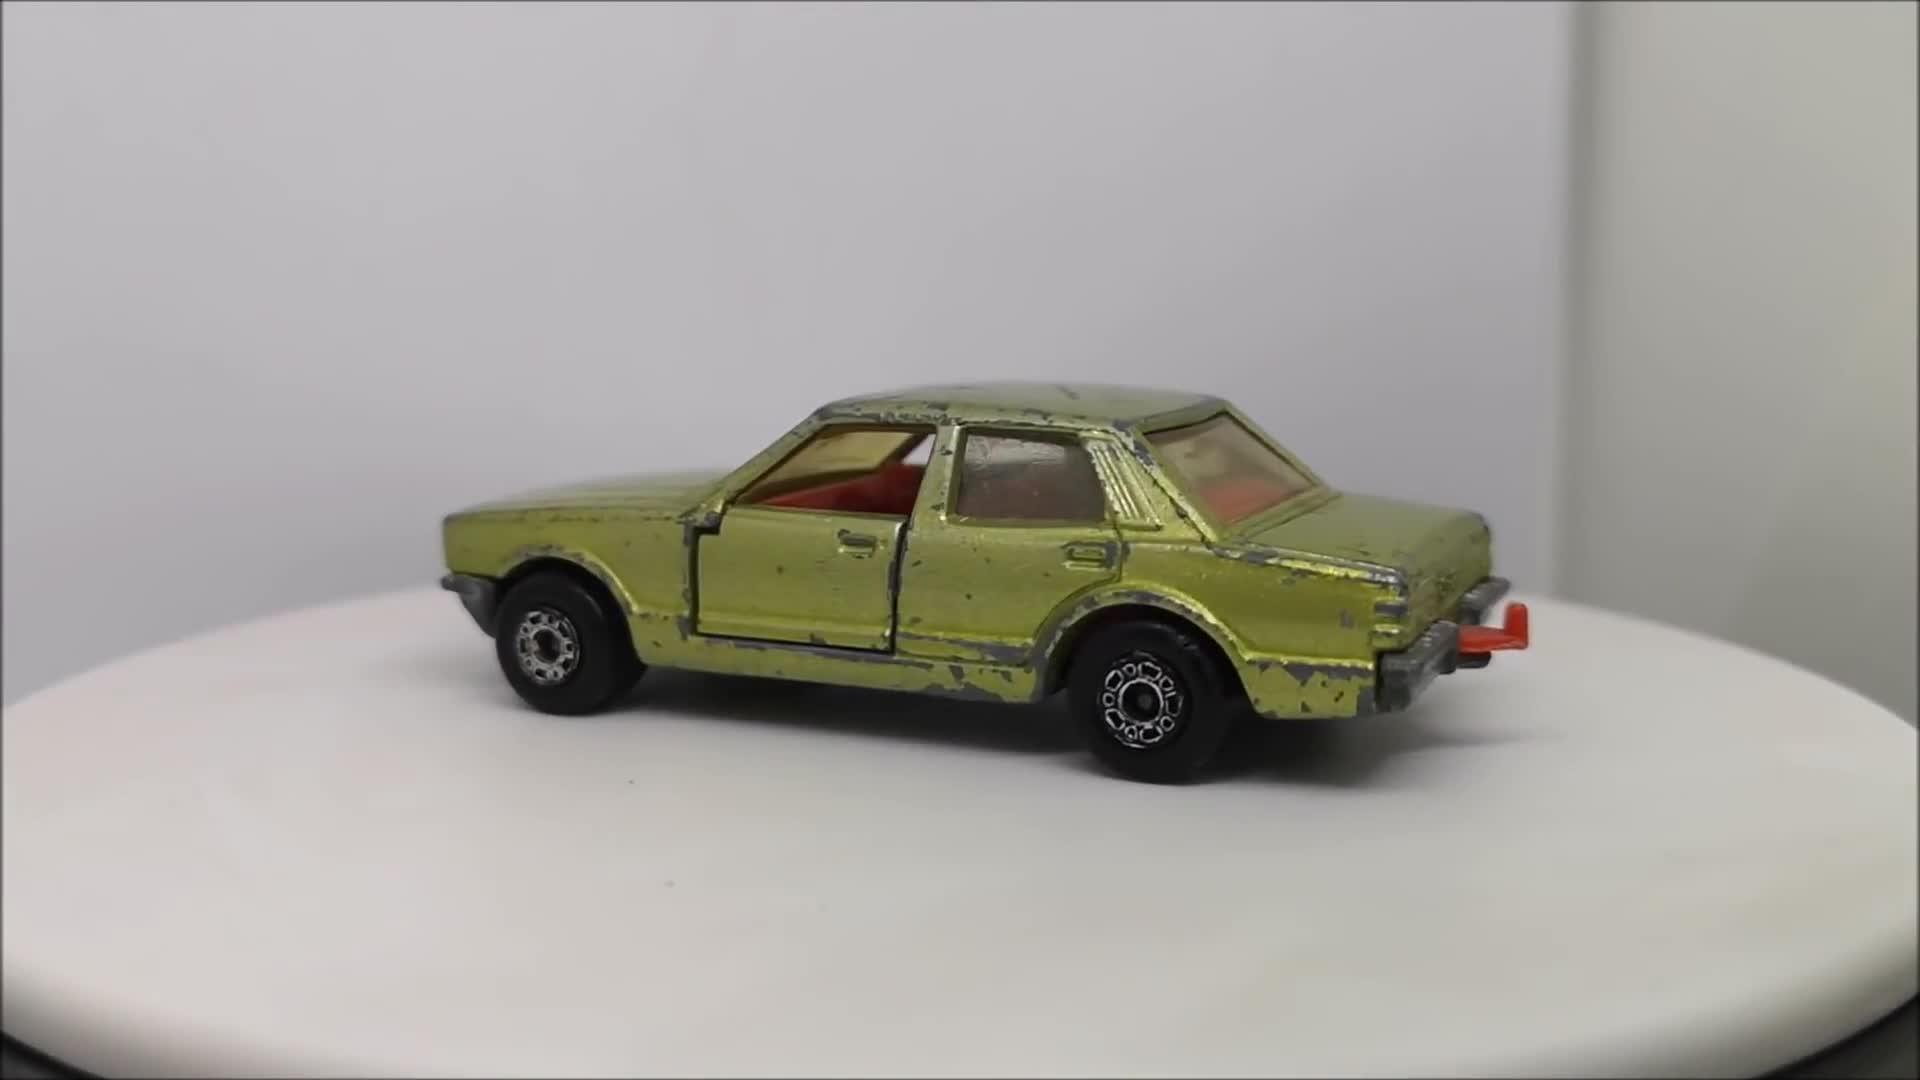 Modification and Renovation of DIY Old Vehicle 1979 Ford Cortina Mark IV